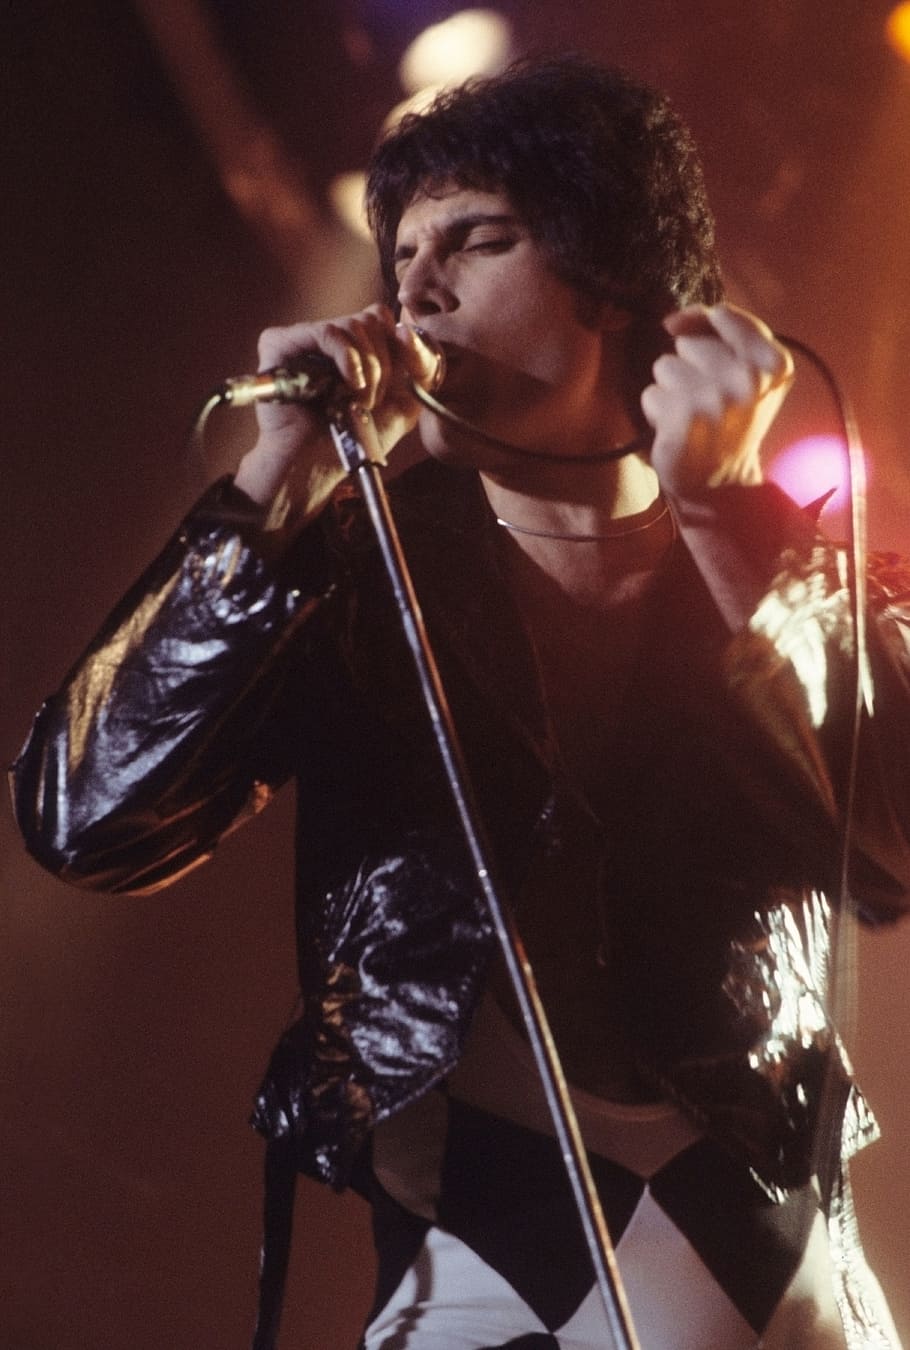 man, holding, microphone, singing, freddie mercury, singer, entertainer, rock and roll, concert, 1978